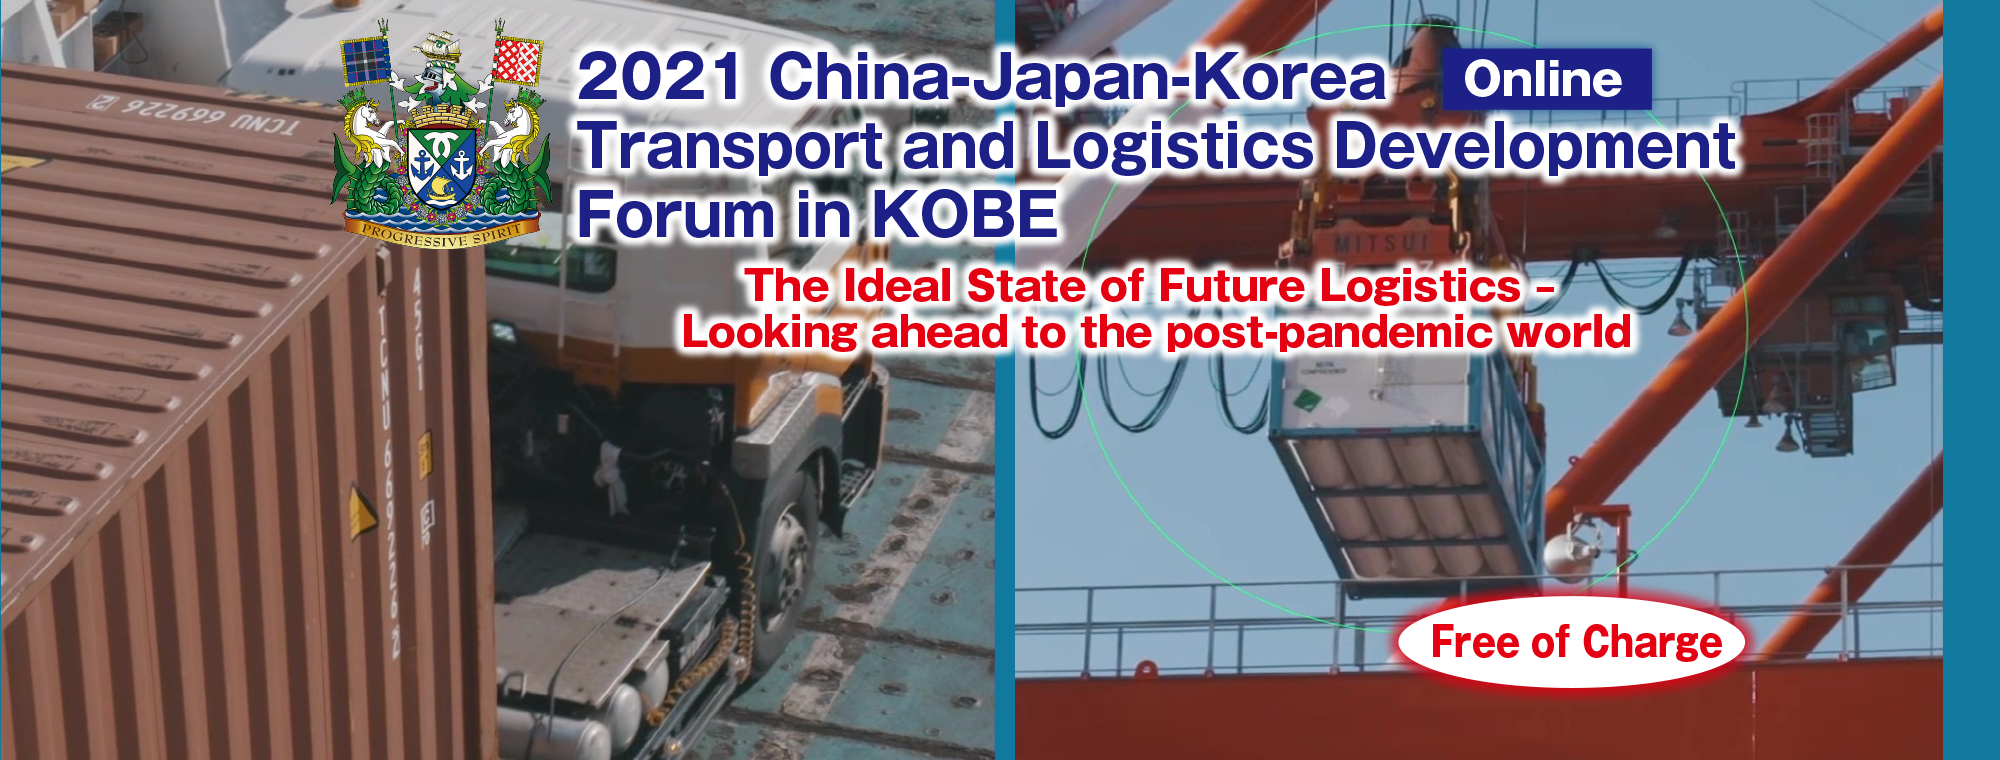 2021 China-Japan-Korea Transport and Logistics Development Forum in KOBE